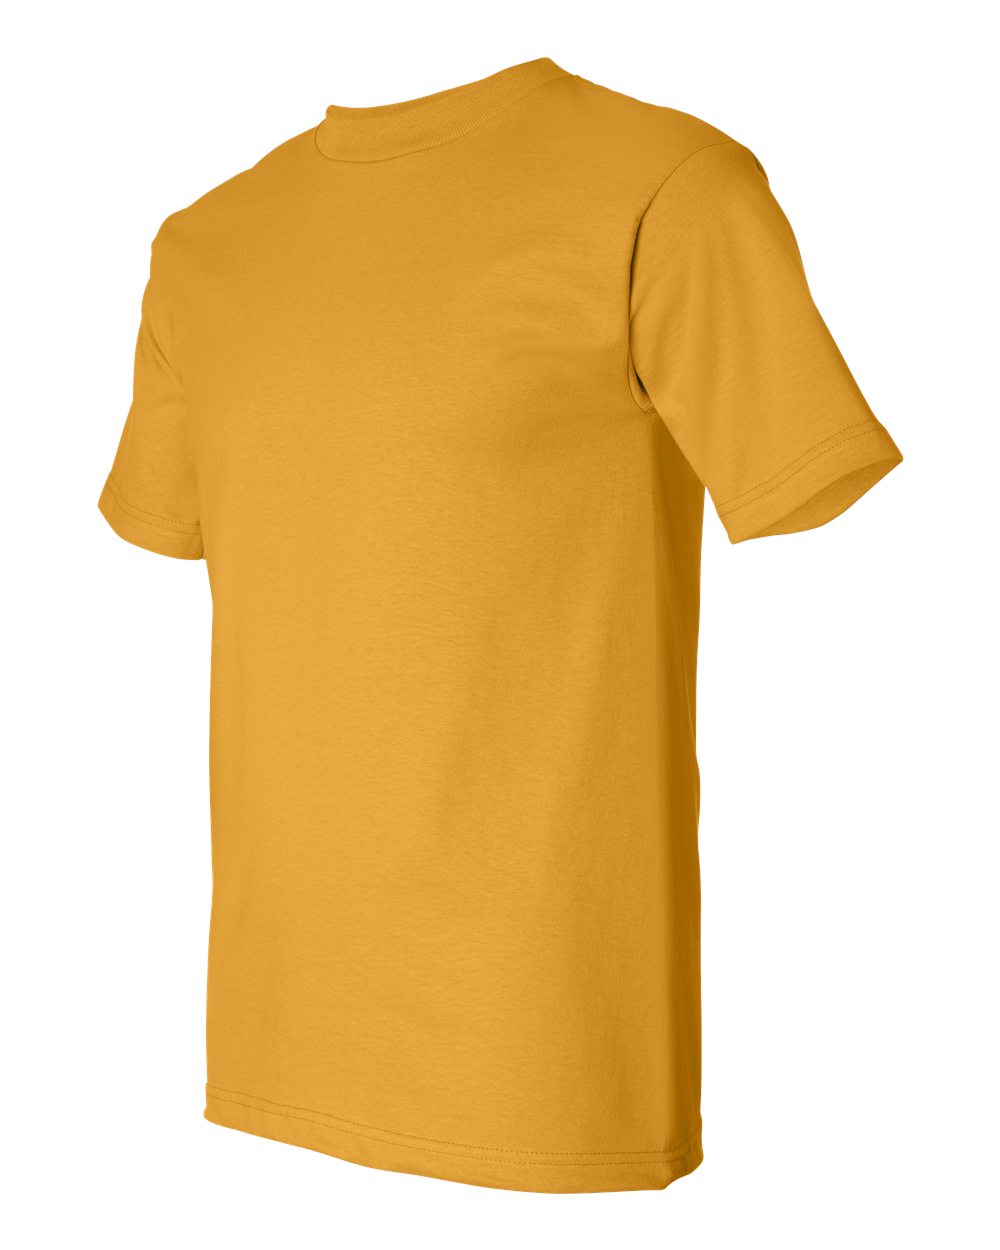 Bayside Short Sleeve T-Shirt USA Made - SHIRT PRINTING 4U